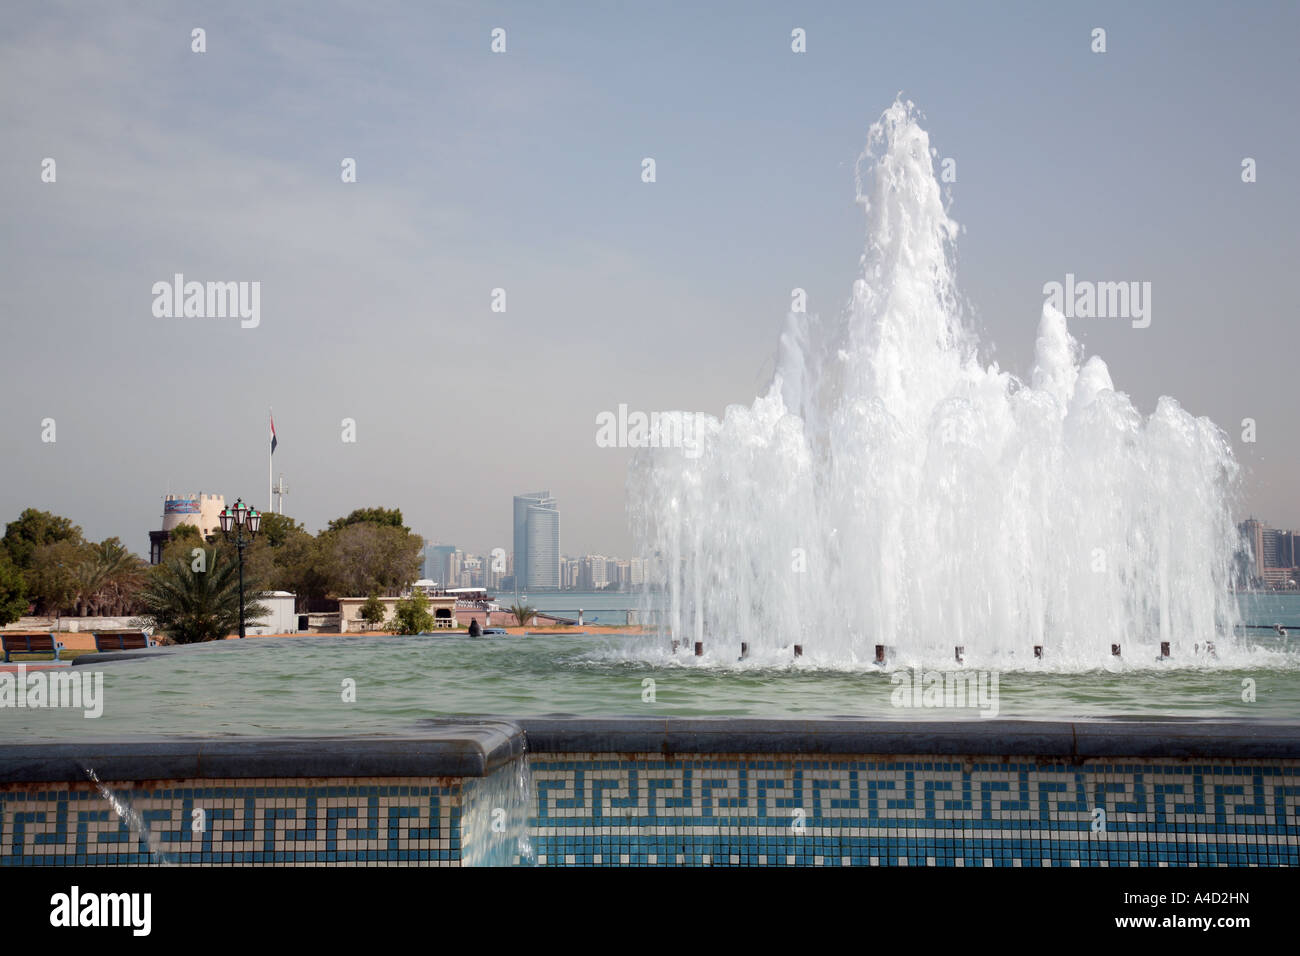 Fountains and skyline, Abu Dhabi city, UAE Stock Photo